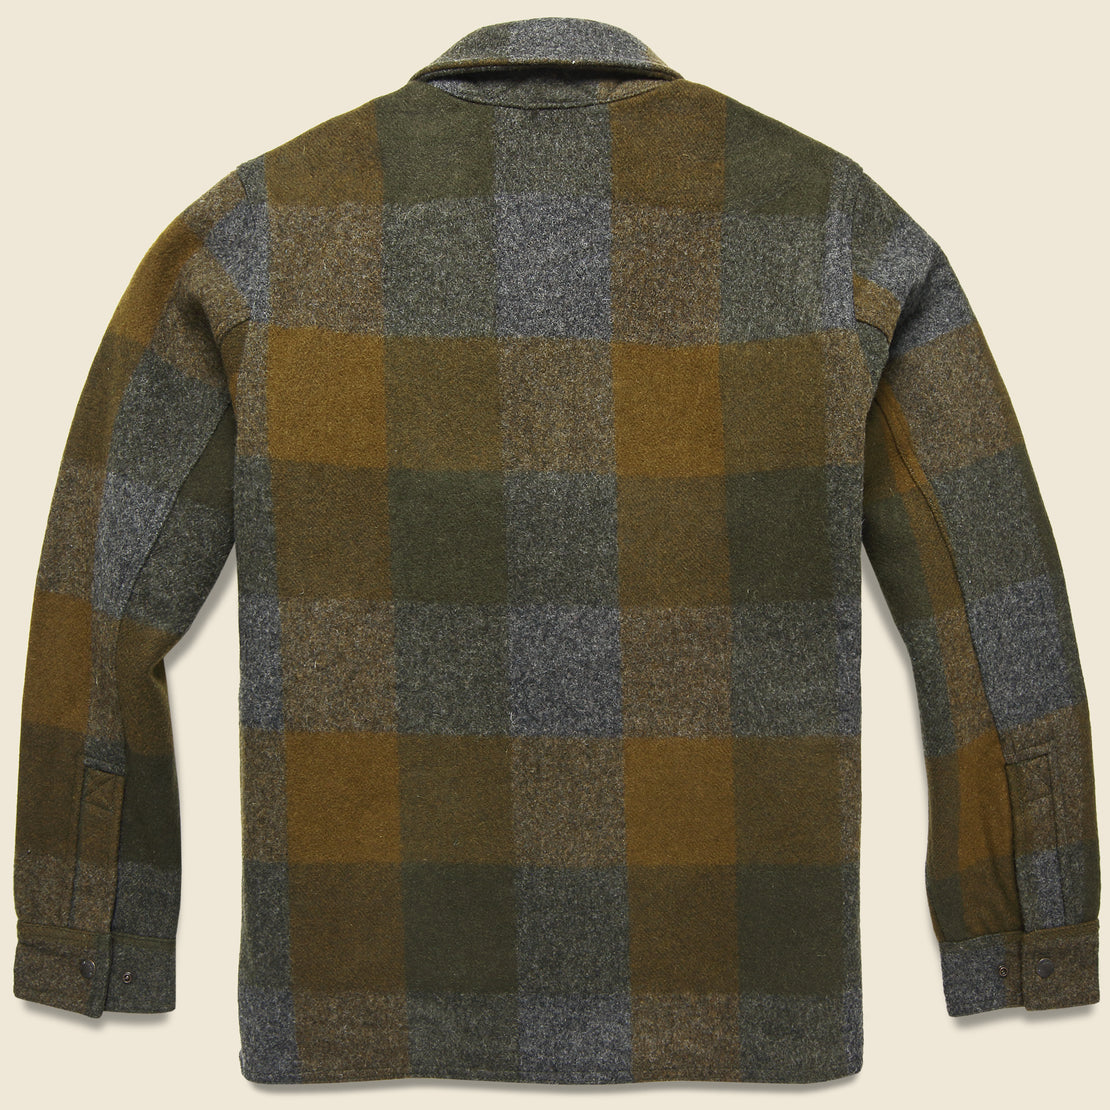 Mackinaw Jac Shirt - Dark Military - Filson - STAG Provisions - Outerwear - Shirt Jacket